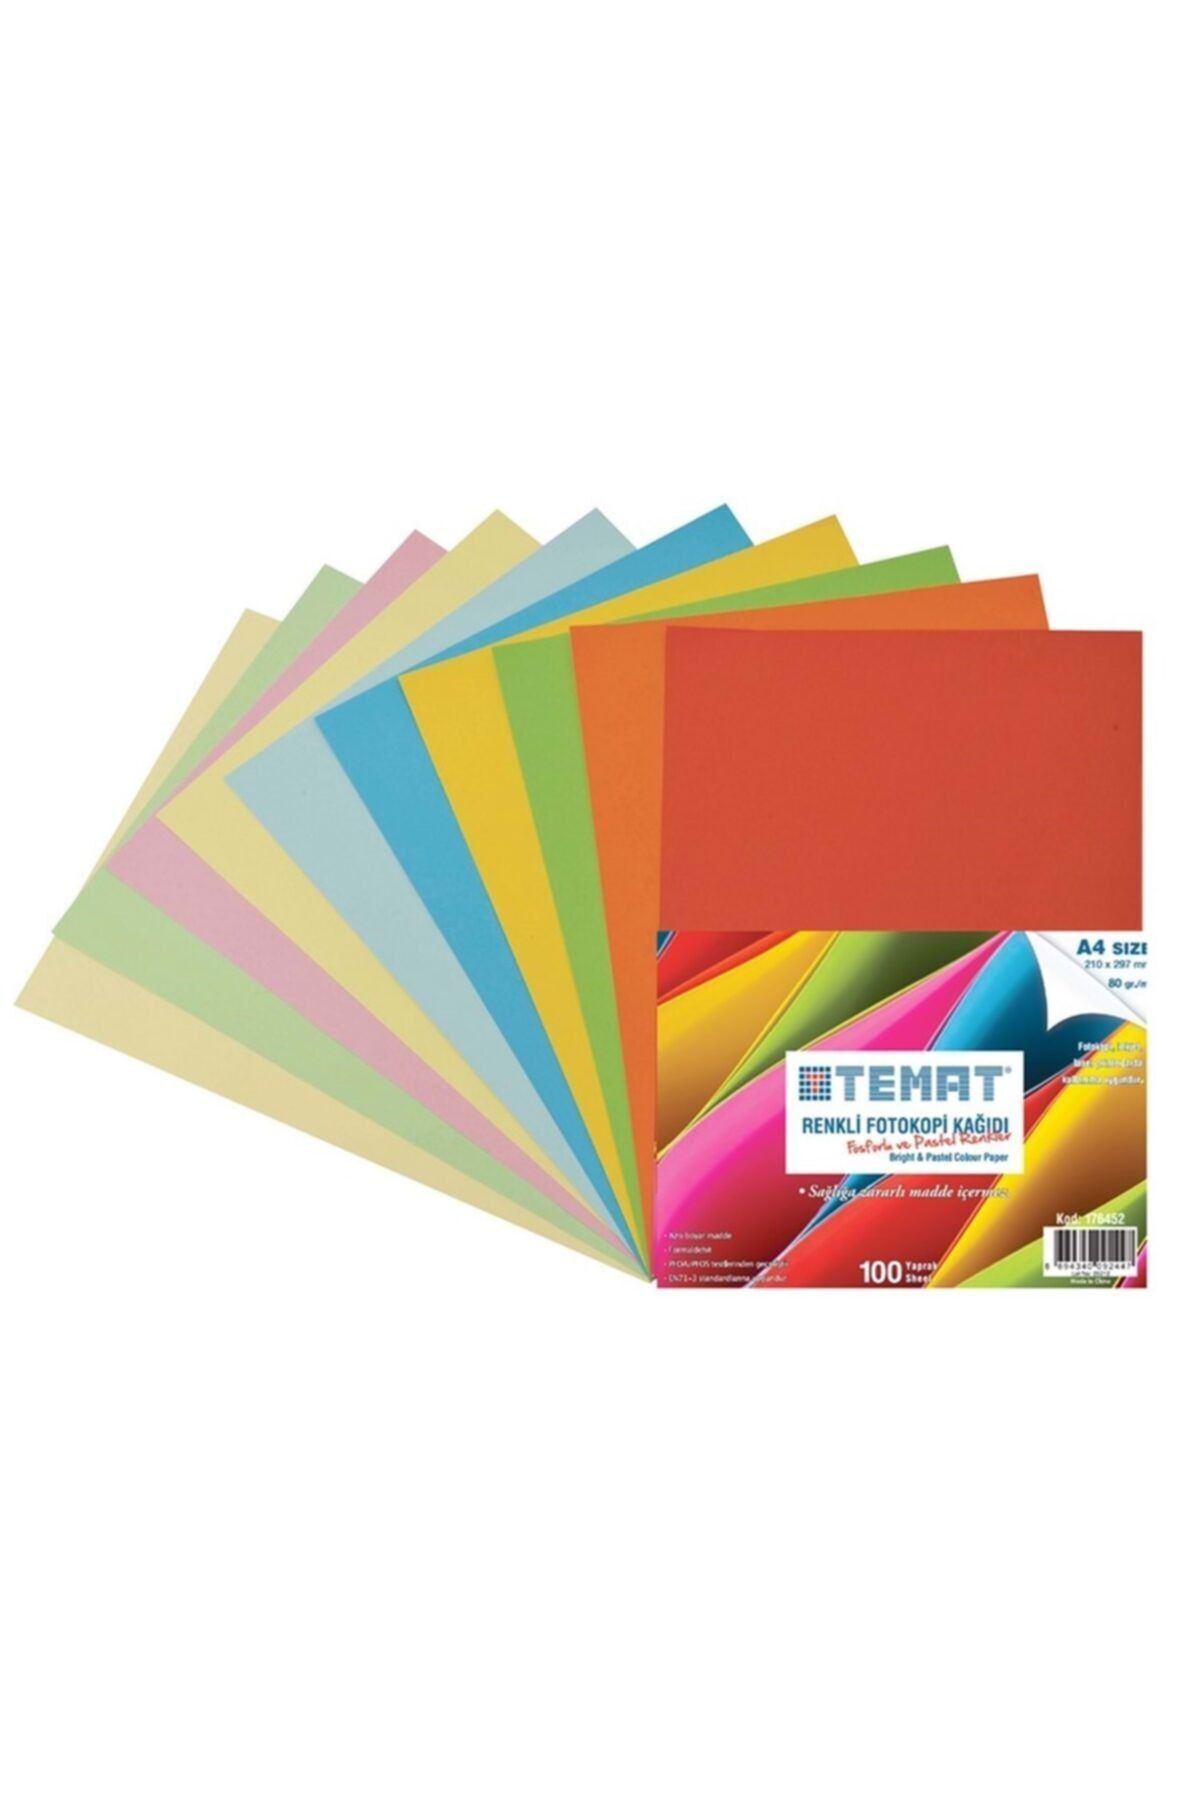 Temat 100 Syf Renkli Fotokopi Kağıdı 2 Adet